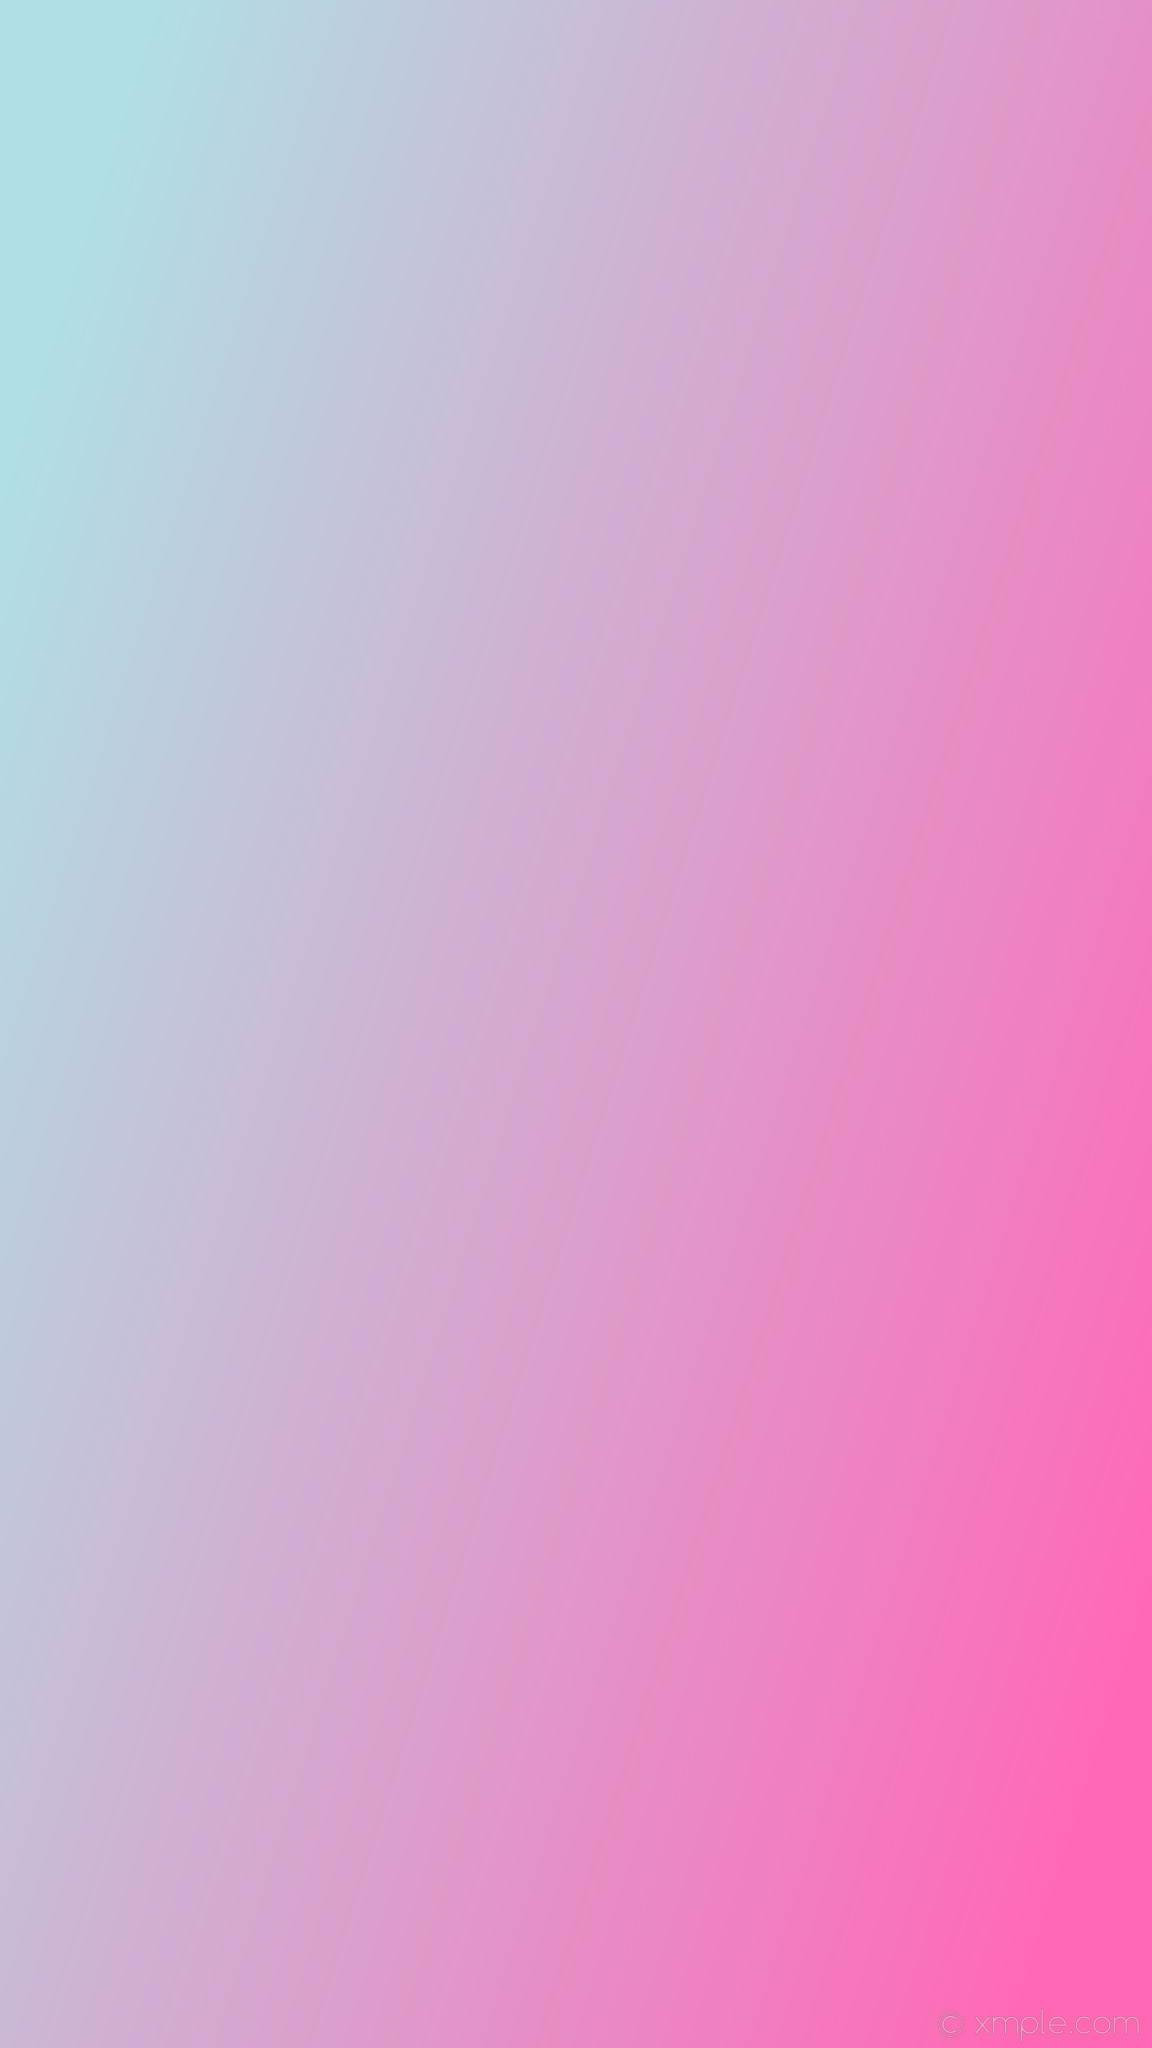 1152x2048 wallpaper pink gradient blue linear hot pink powder blue #ff69b4 #b0e0e6  315Â°